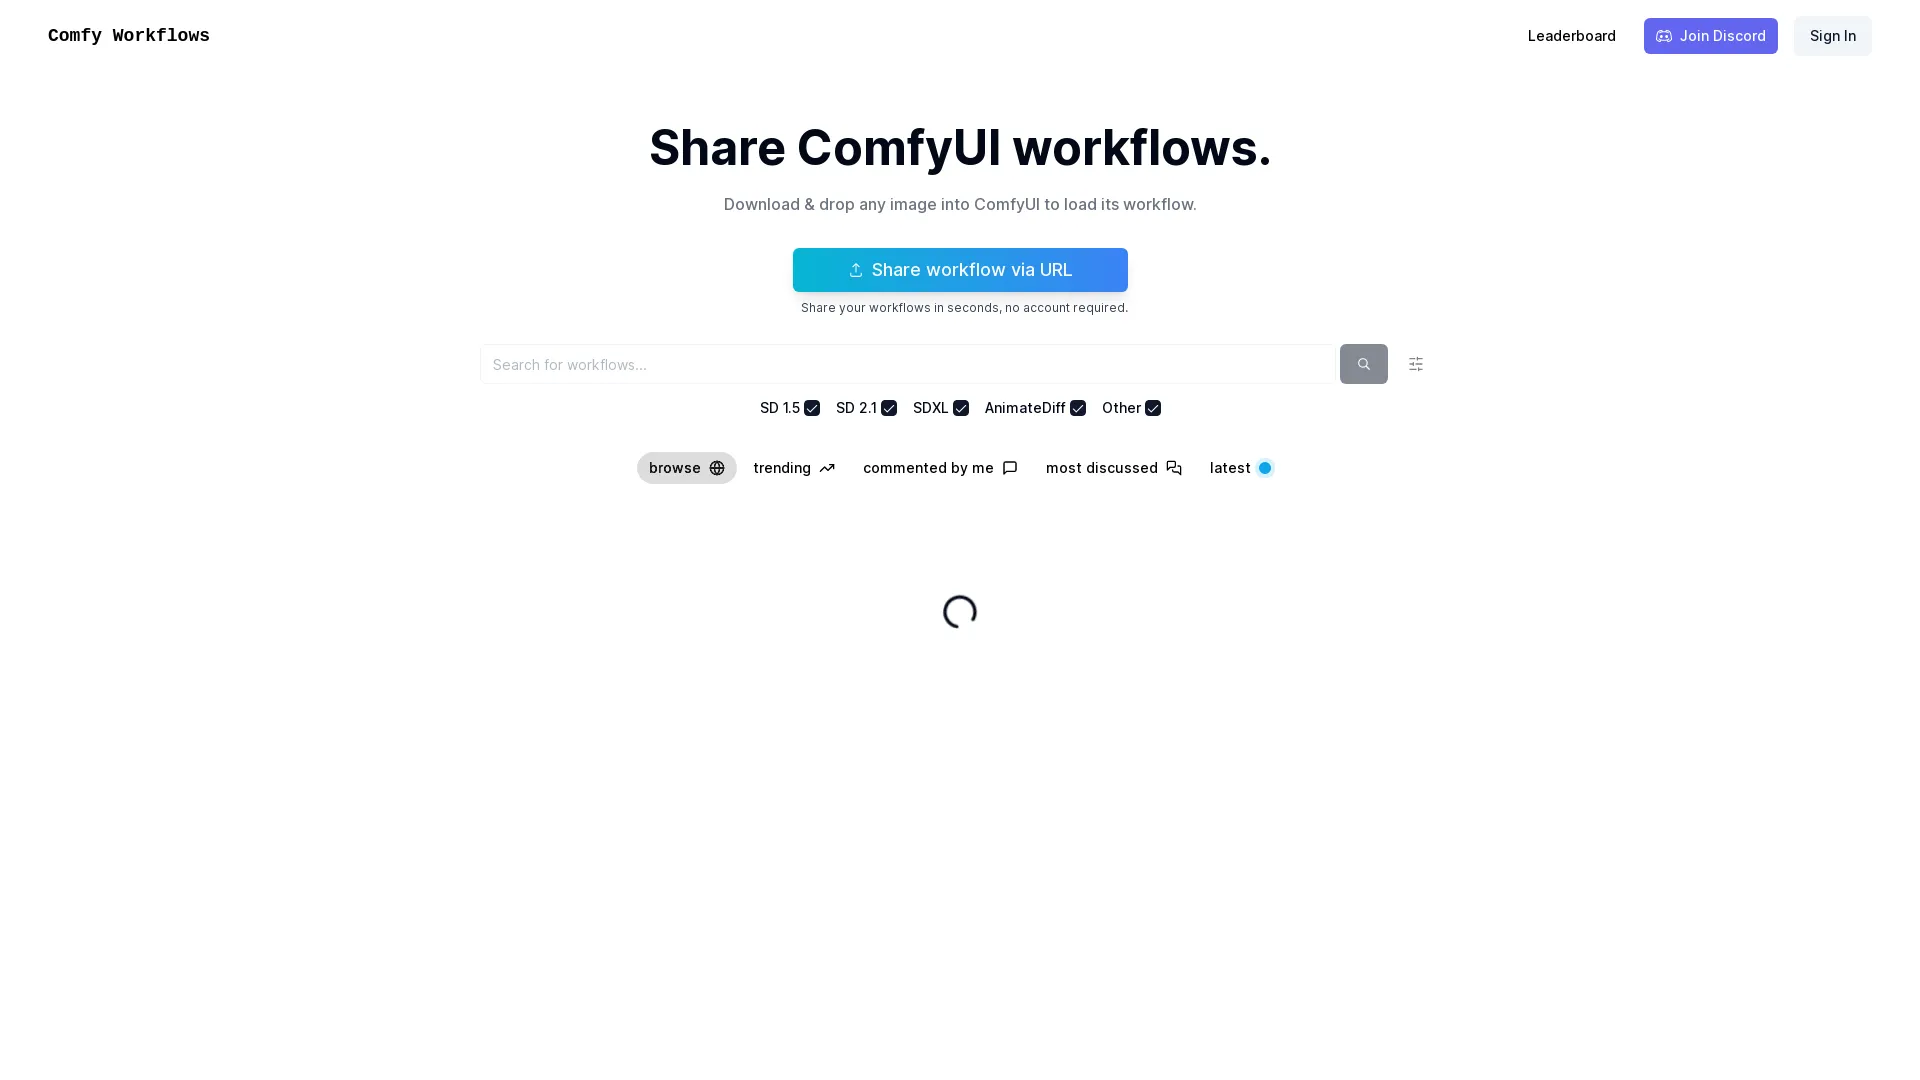 Comfy Workflows